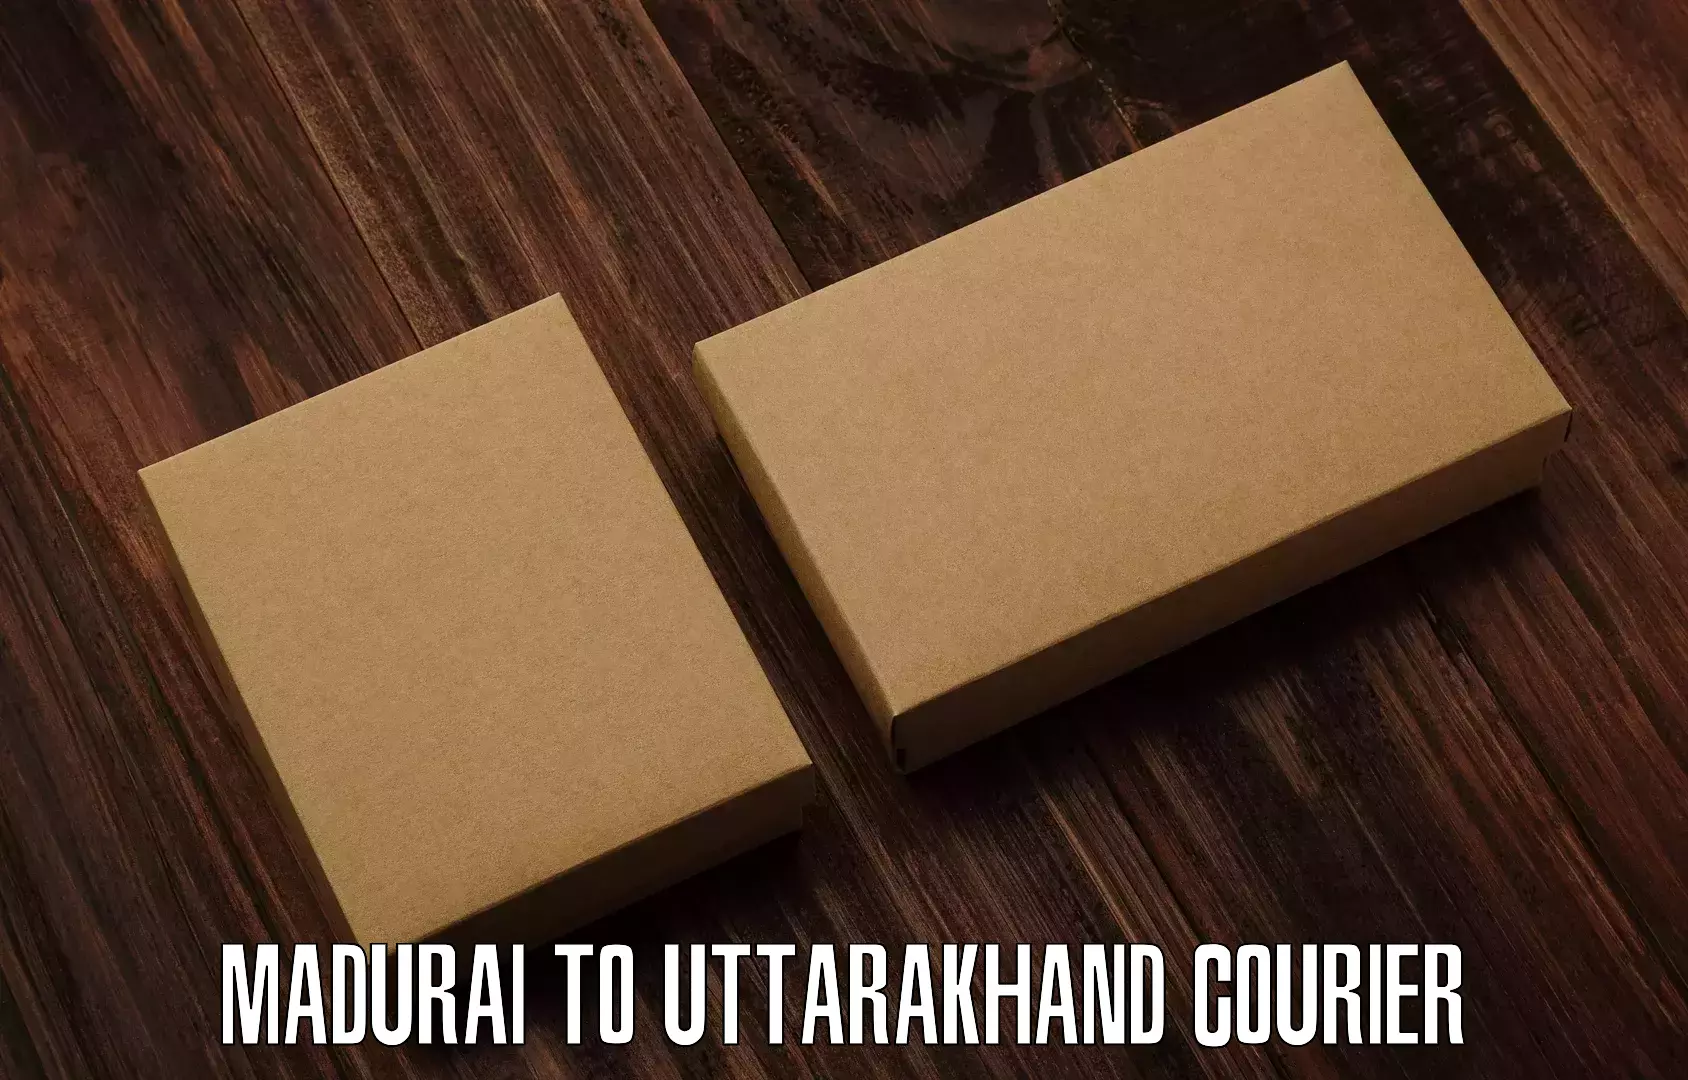 Efficient order fulfillment Madurai to Almora